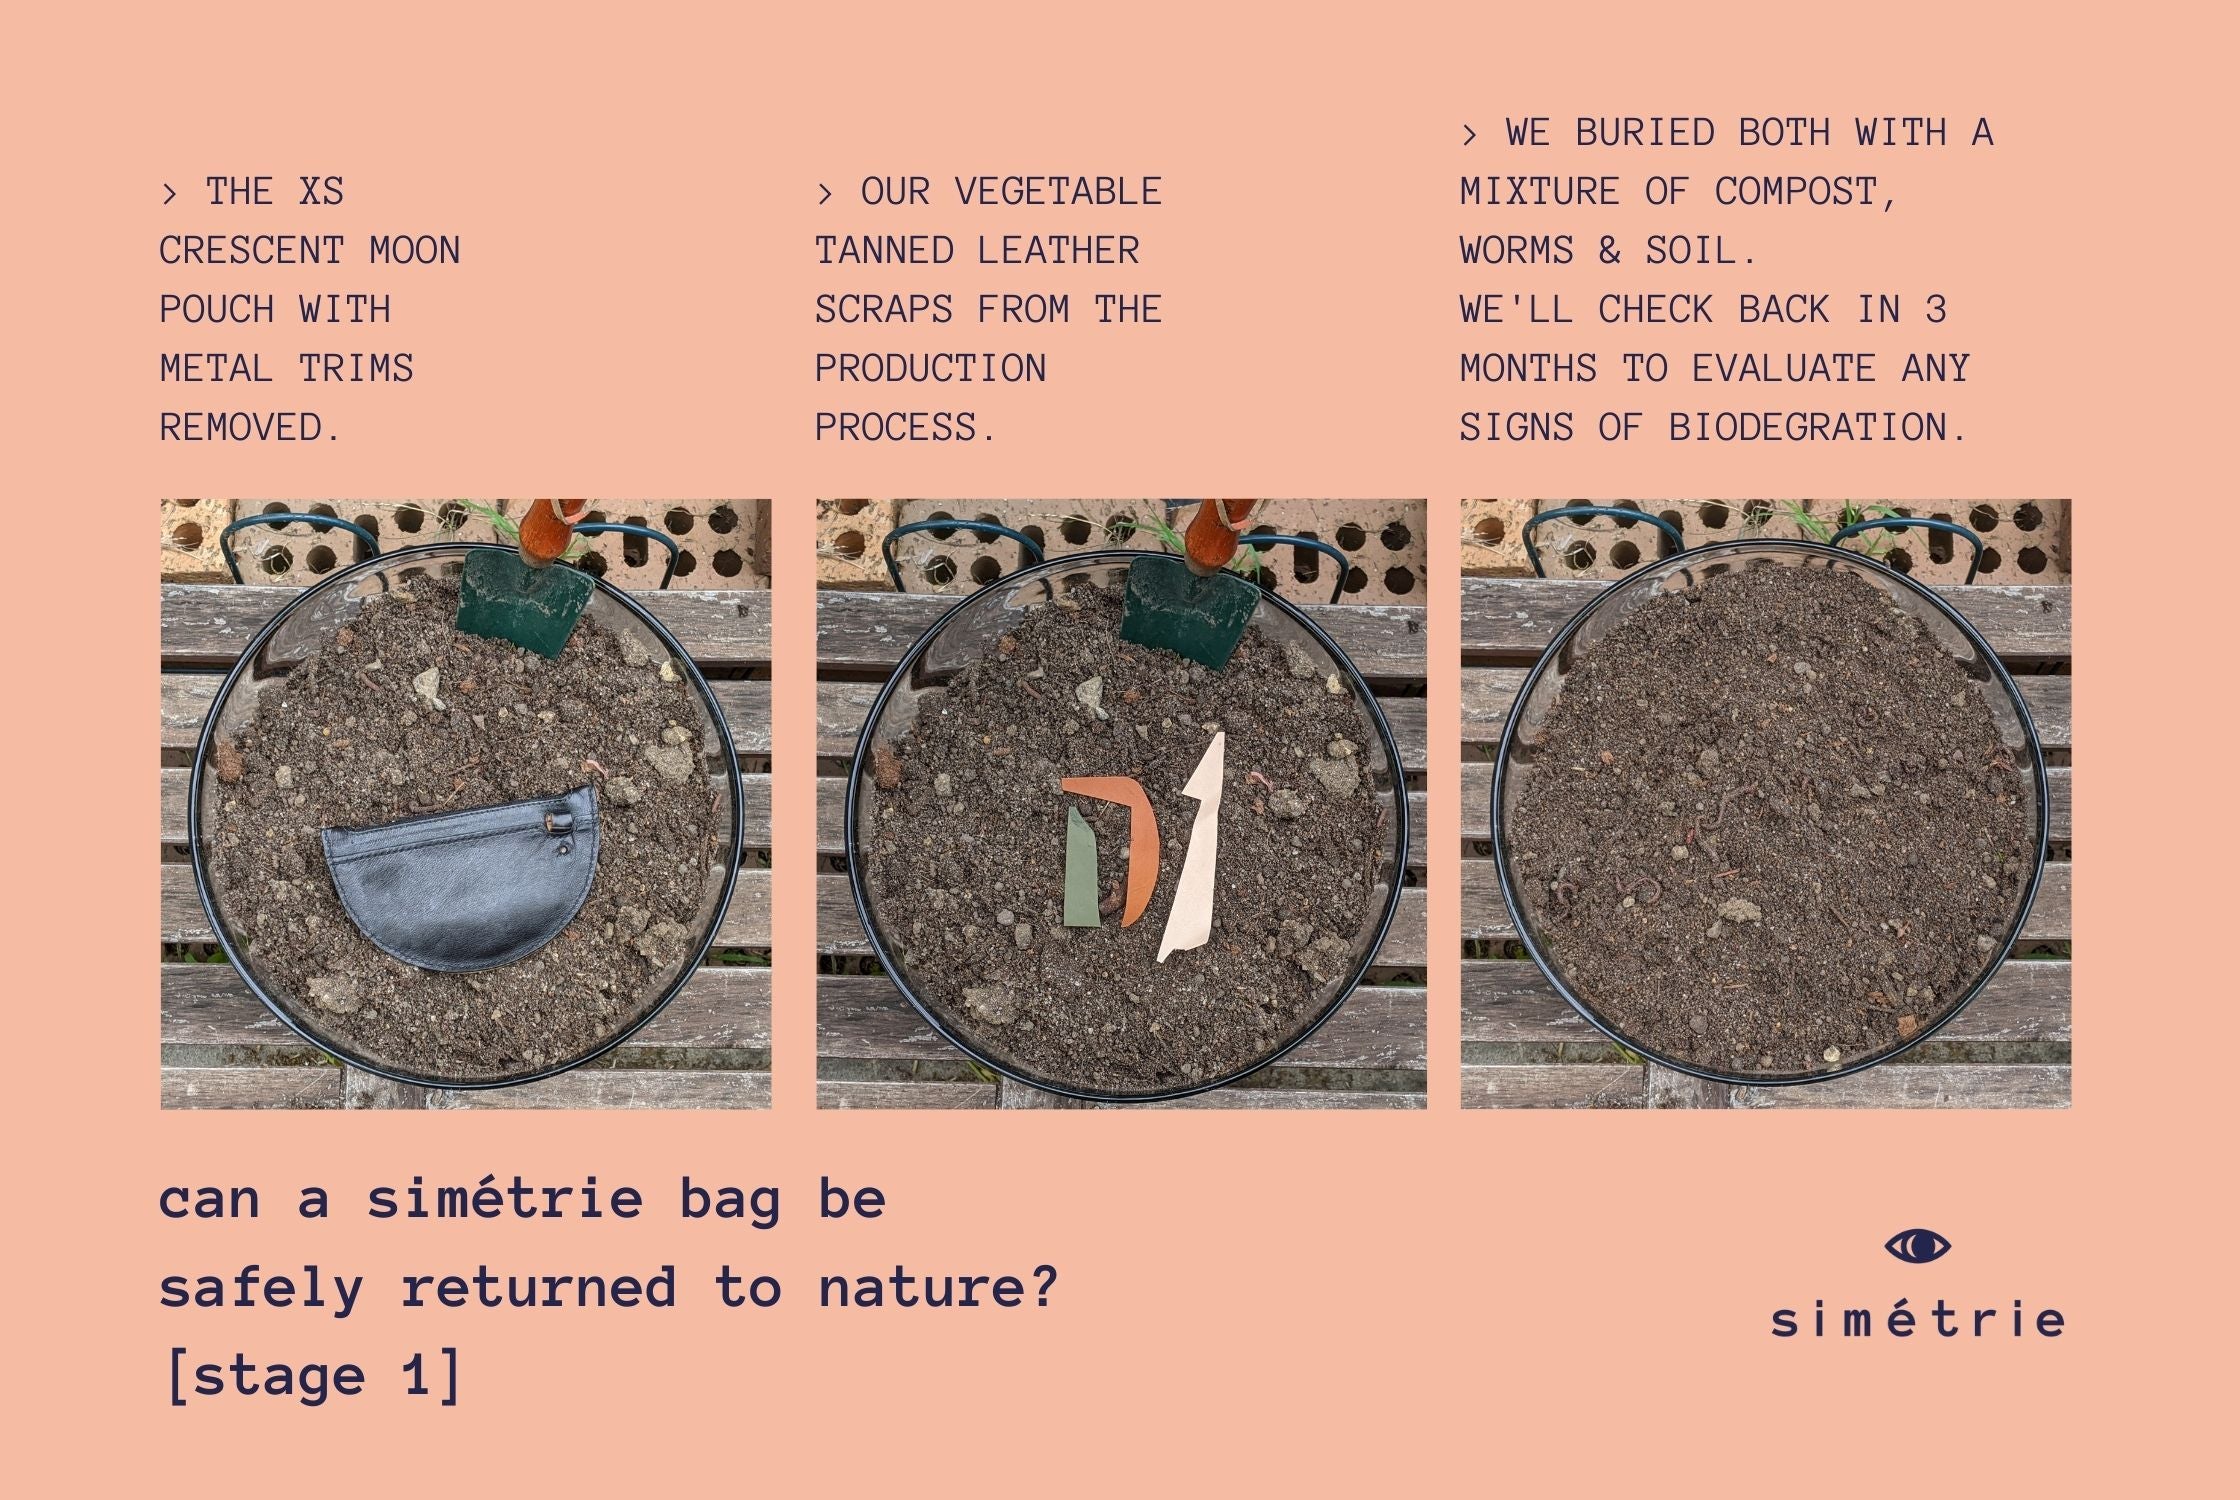 can a simétrie leather bag safely biodegrade